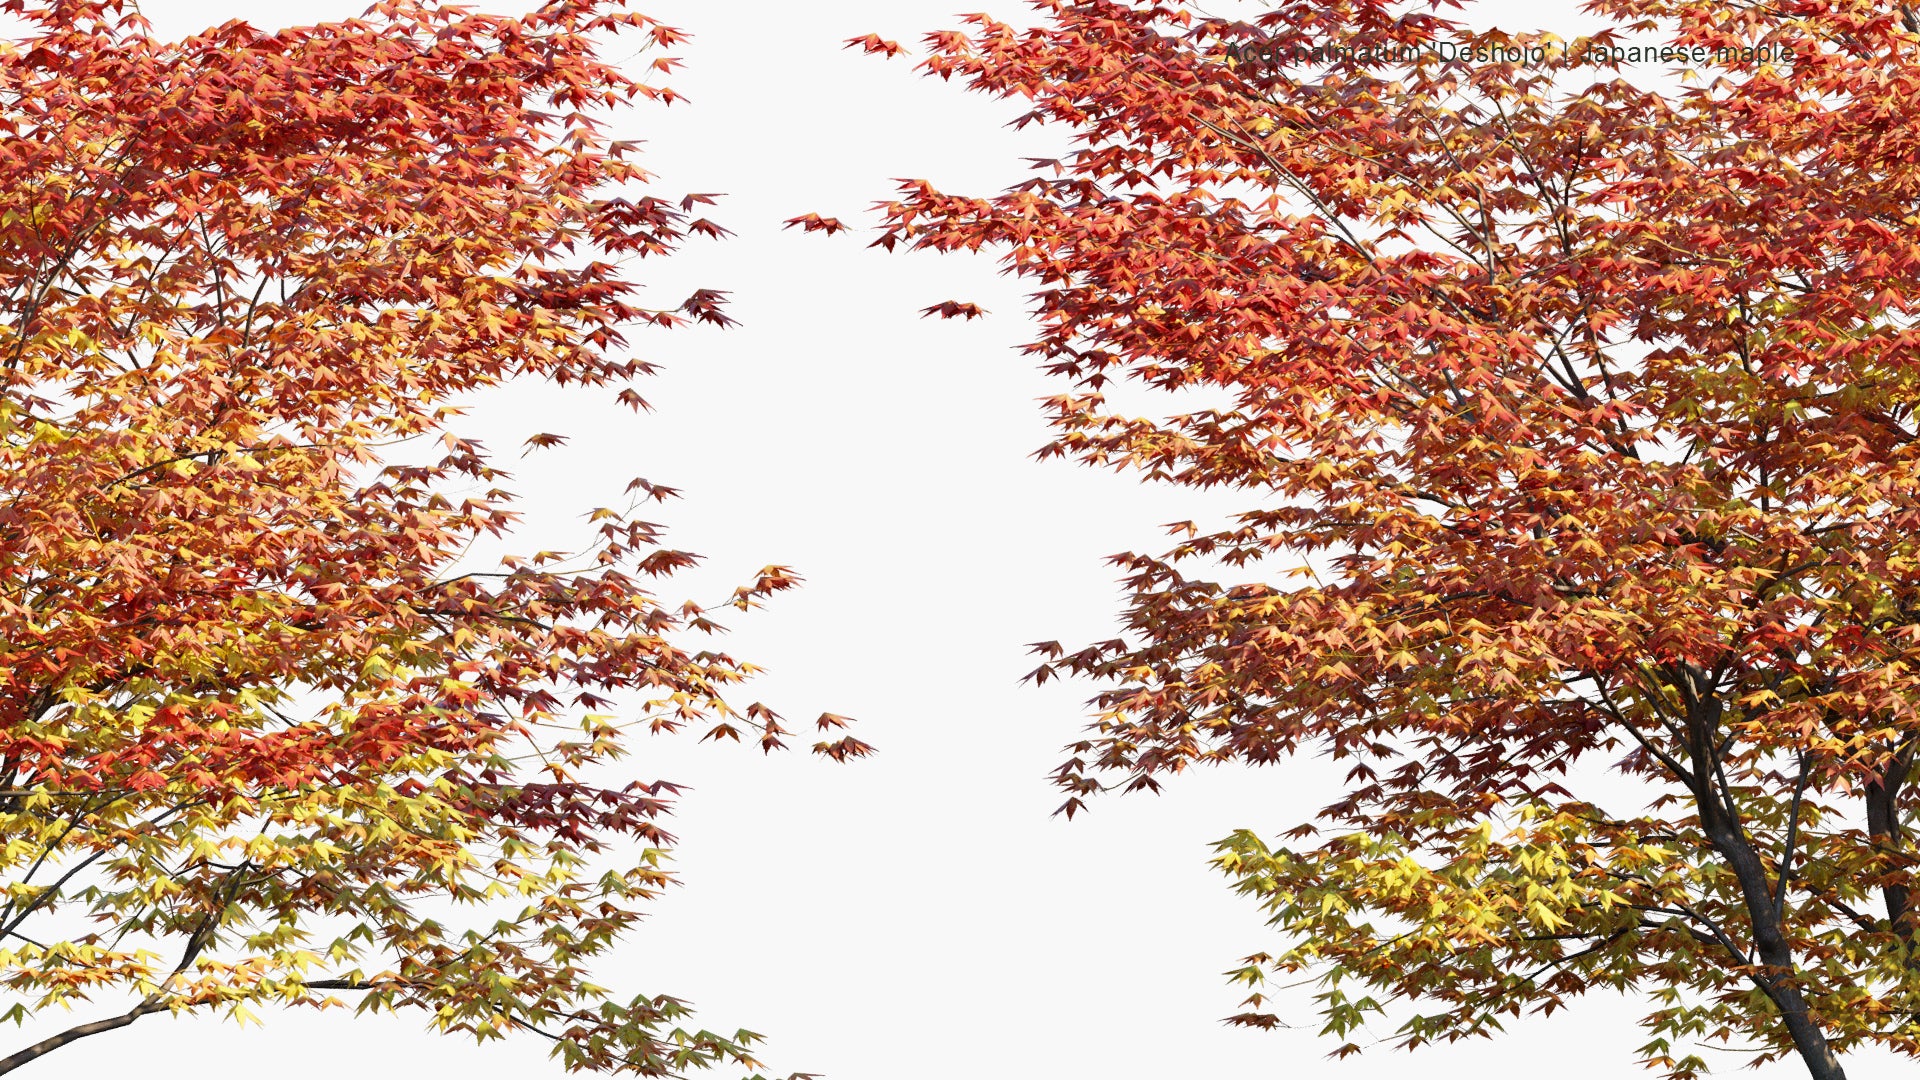 Low Poly Acer Palmatum 'Deshojo' - Japanese Maple, Deshojo Maple, Red Japanese Maple (3D Model)